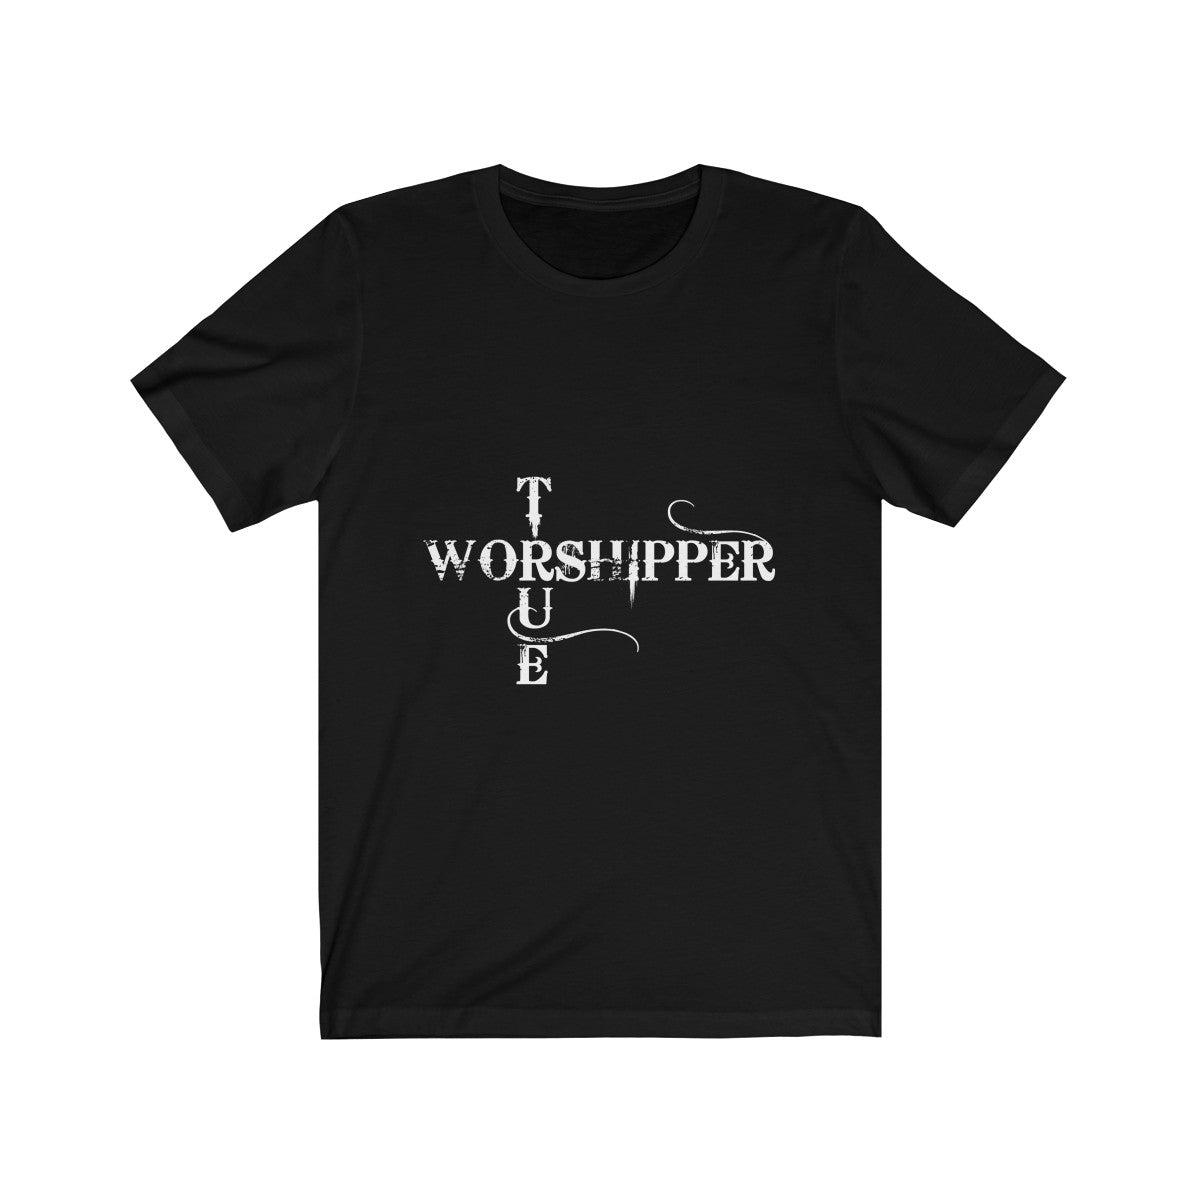 True Worshipper Tee - Black